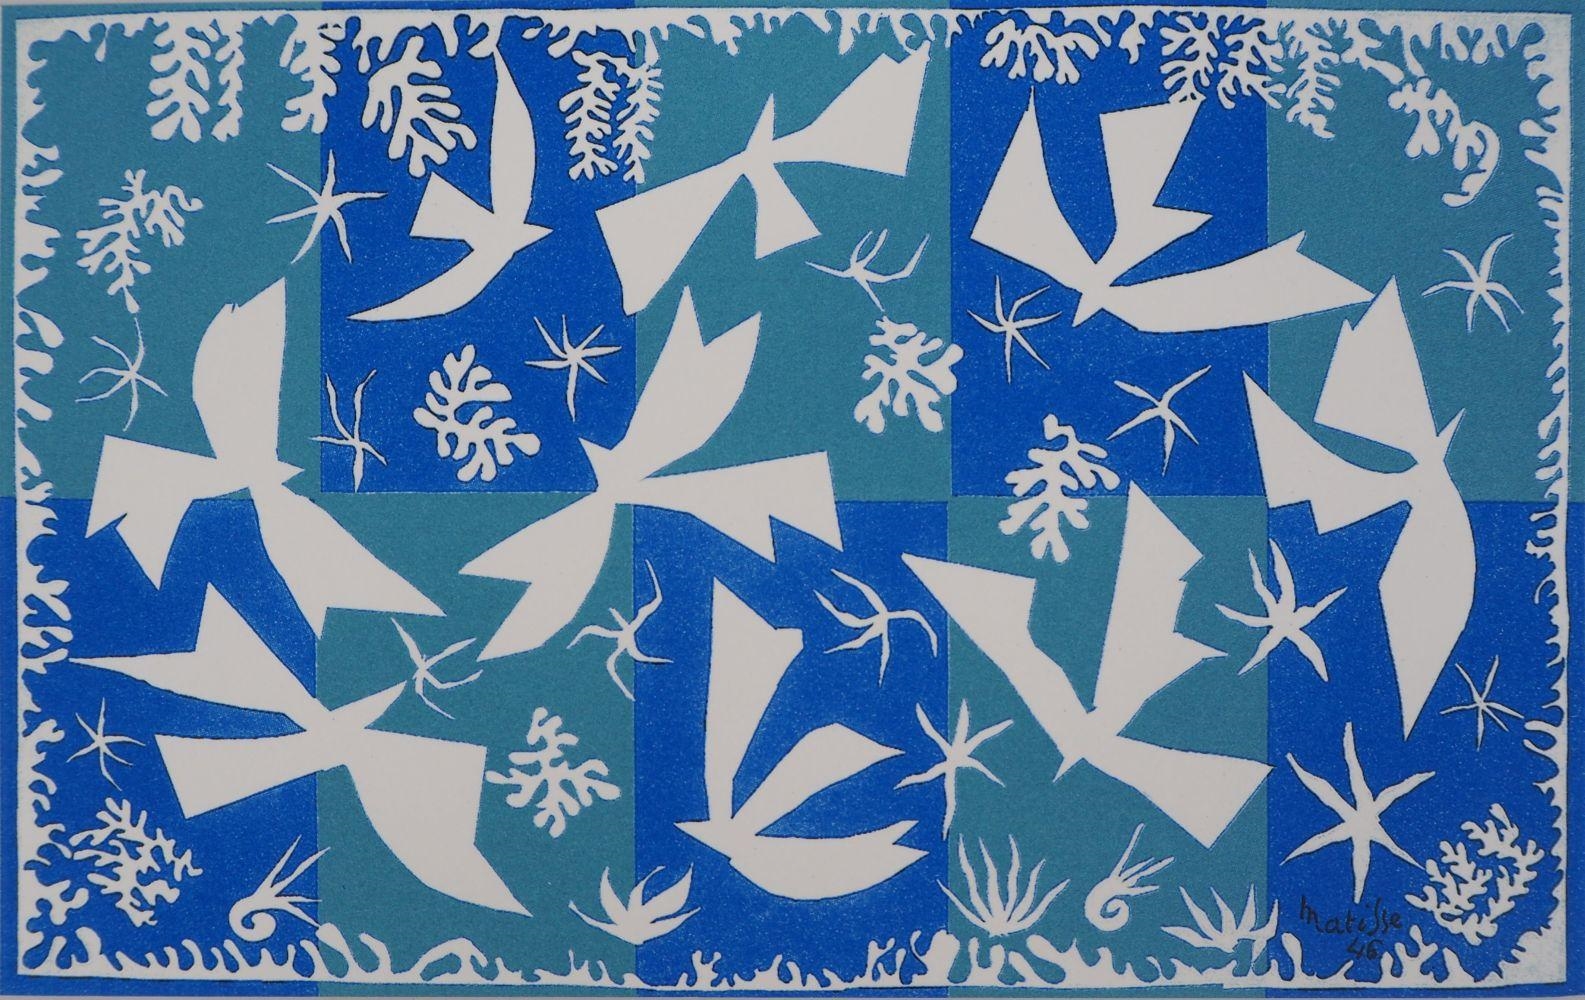 Henri MATISSE - Colombes dans le ciel by Henri Matisse, 2000